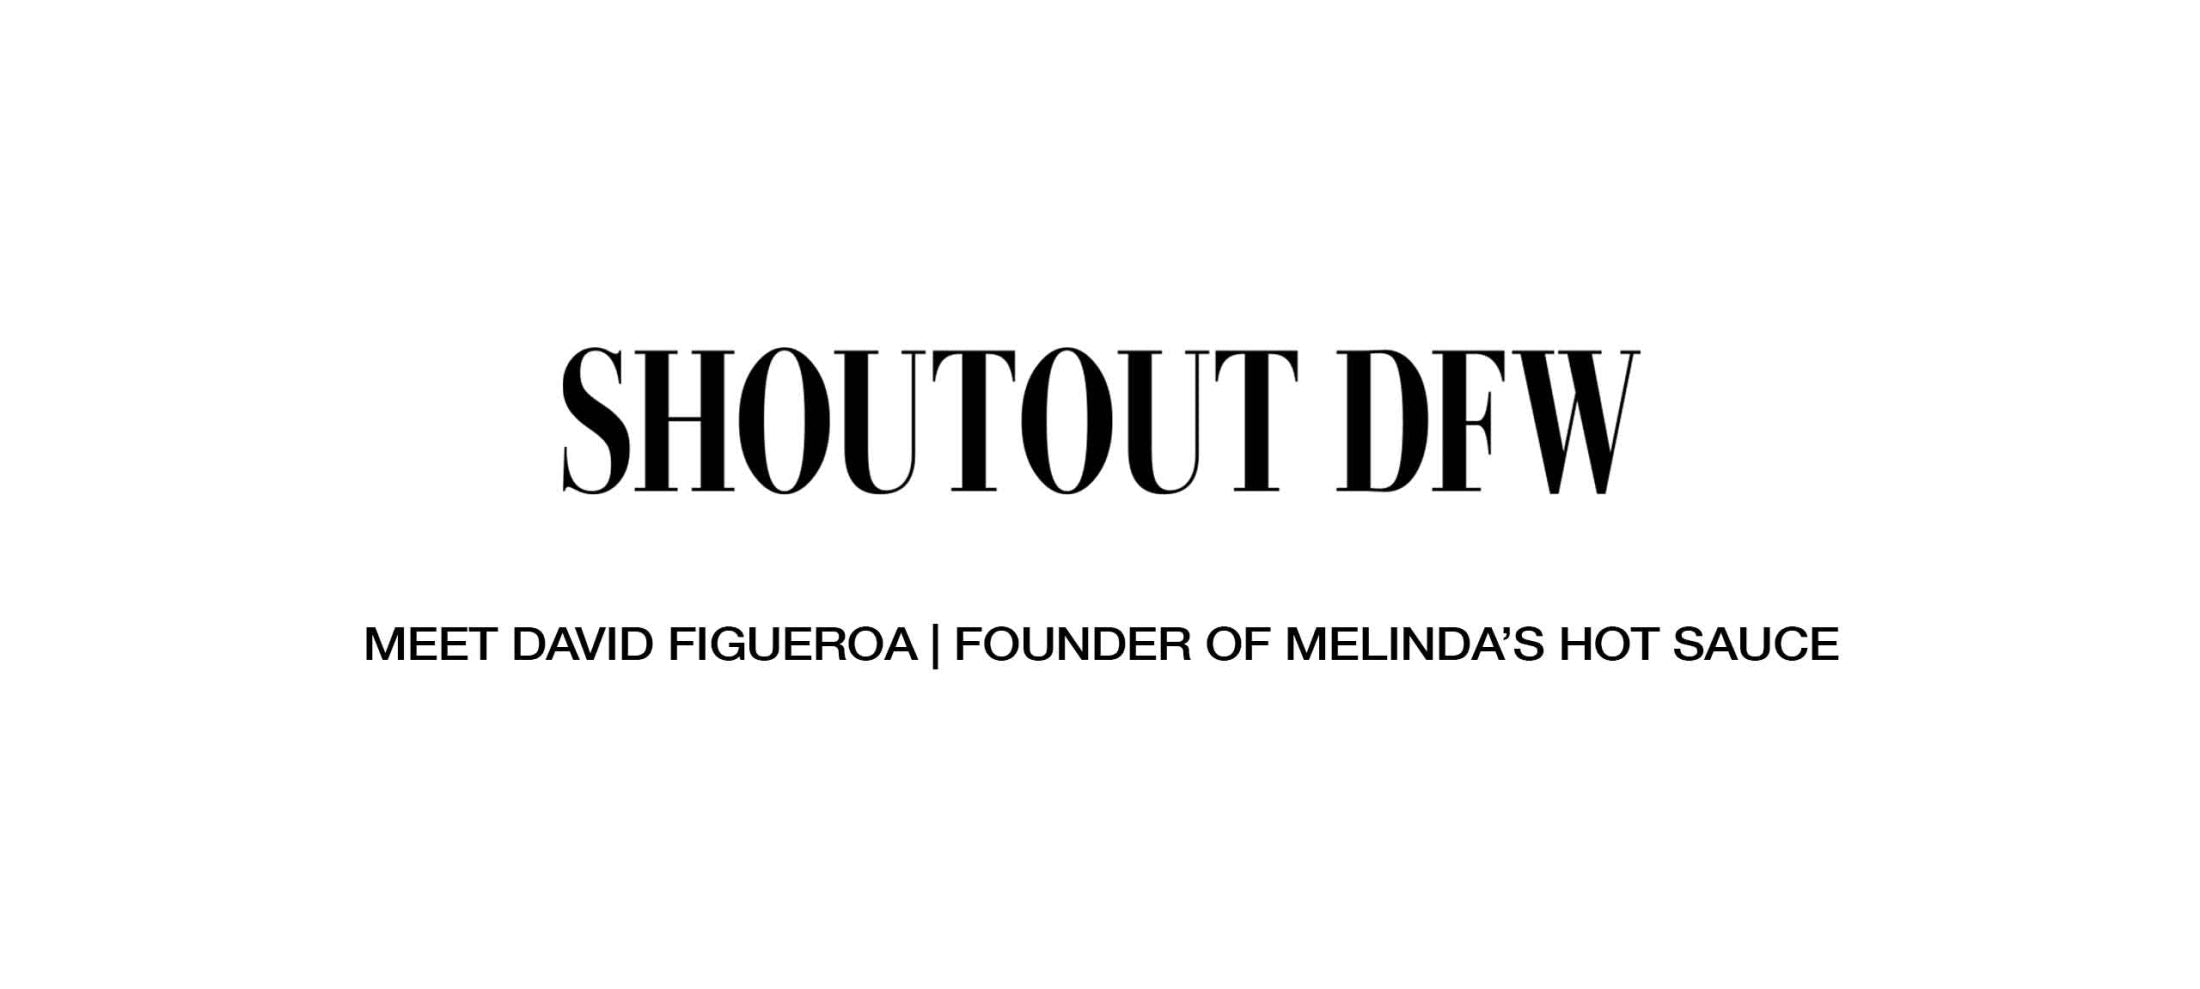 Meet David Figueroa - Founder of Melinda’s Hot Sauce | By SHOUTOUT DFW